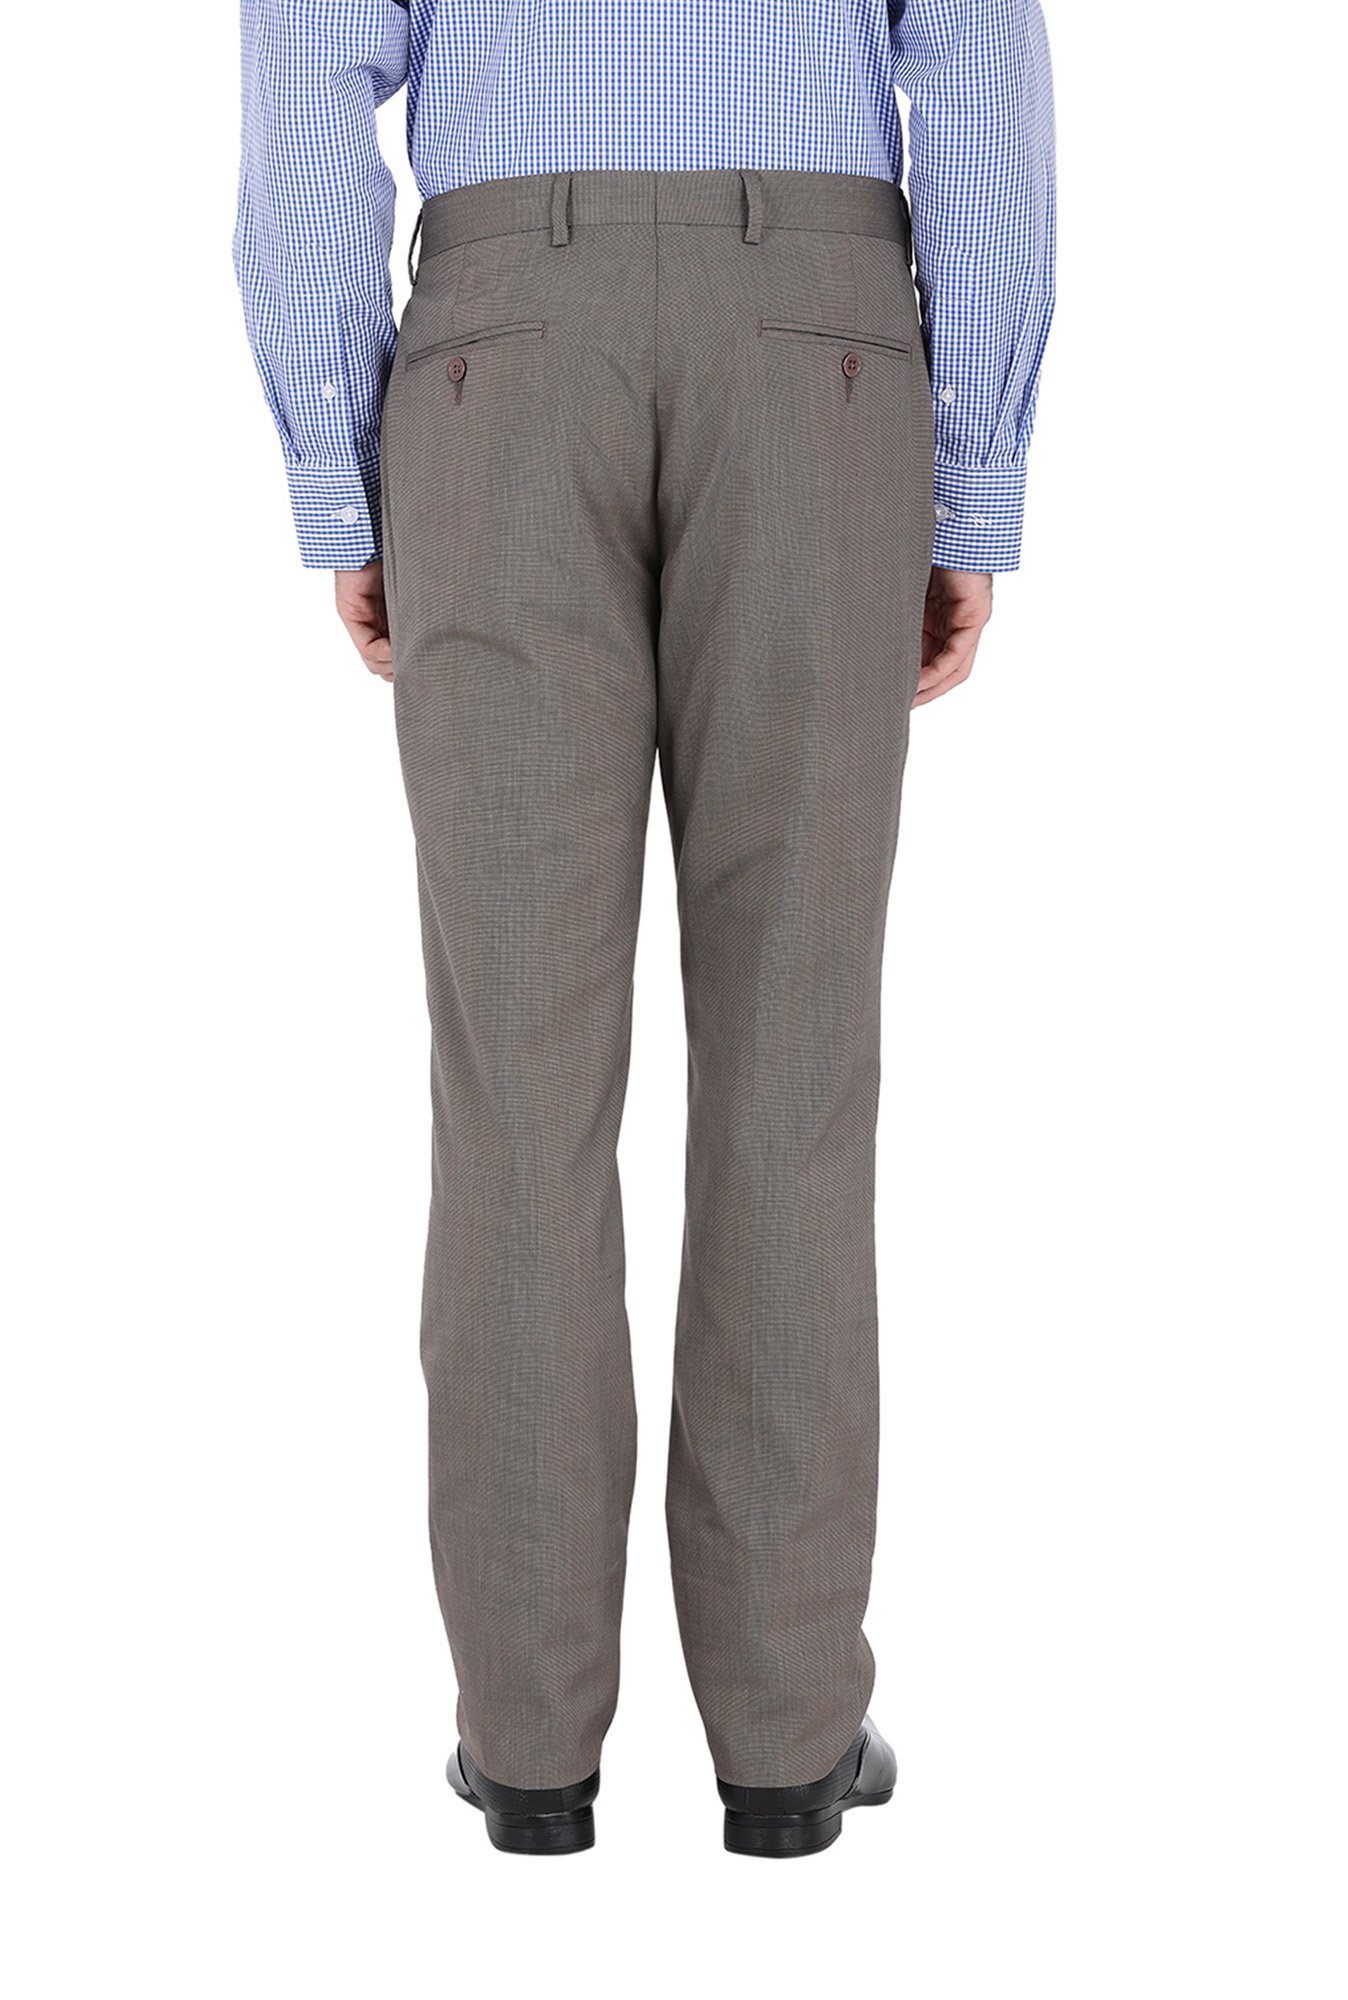 John Players Slim Fit Men Grey Trousers  Buy John Players Slim Fit Men  Grey Trousers Online at Best Prices in India  Flipkartcom